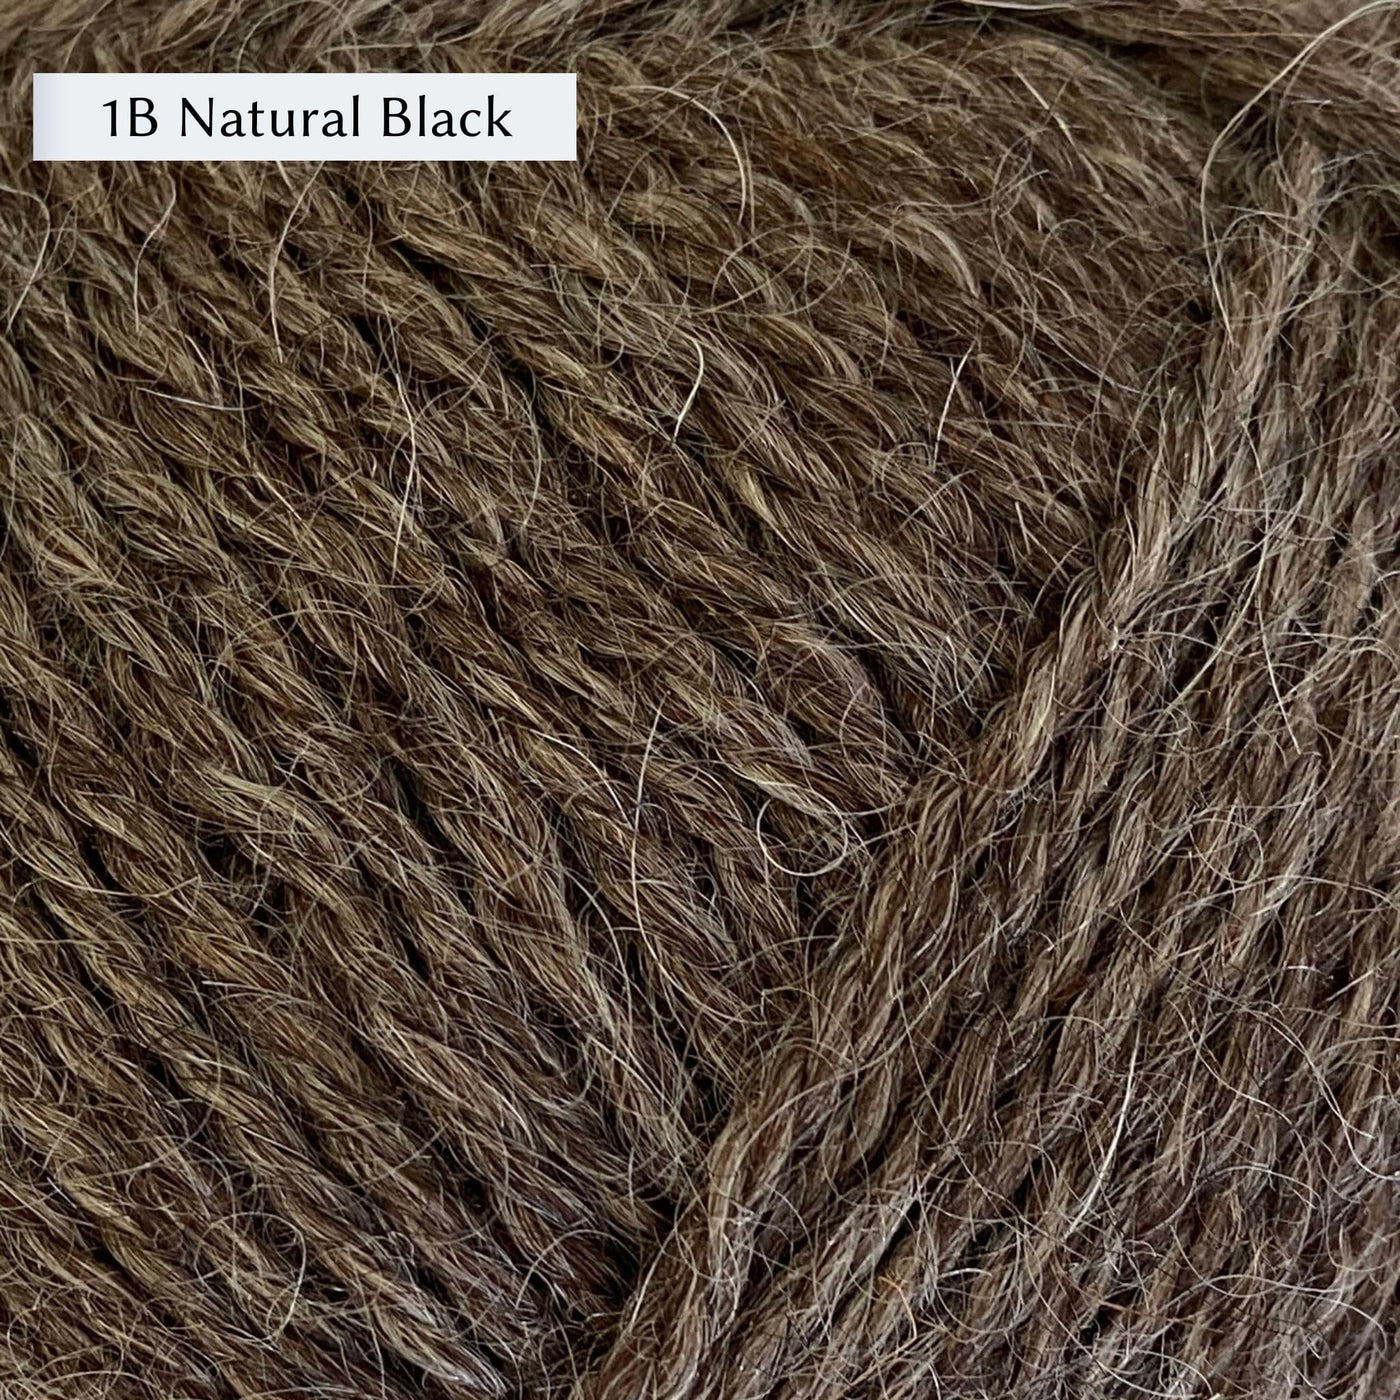 Wensleydale Longwool Aran, an aran weight yarn made from Wensleydale sheep, in color 1B Natural Black, a warm dark chocolate brown